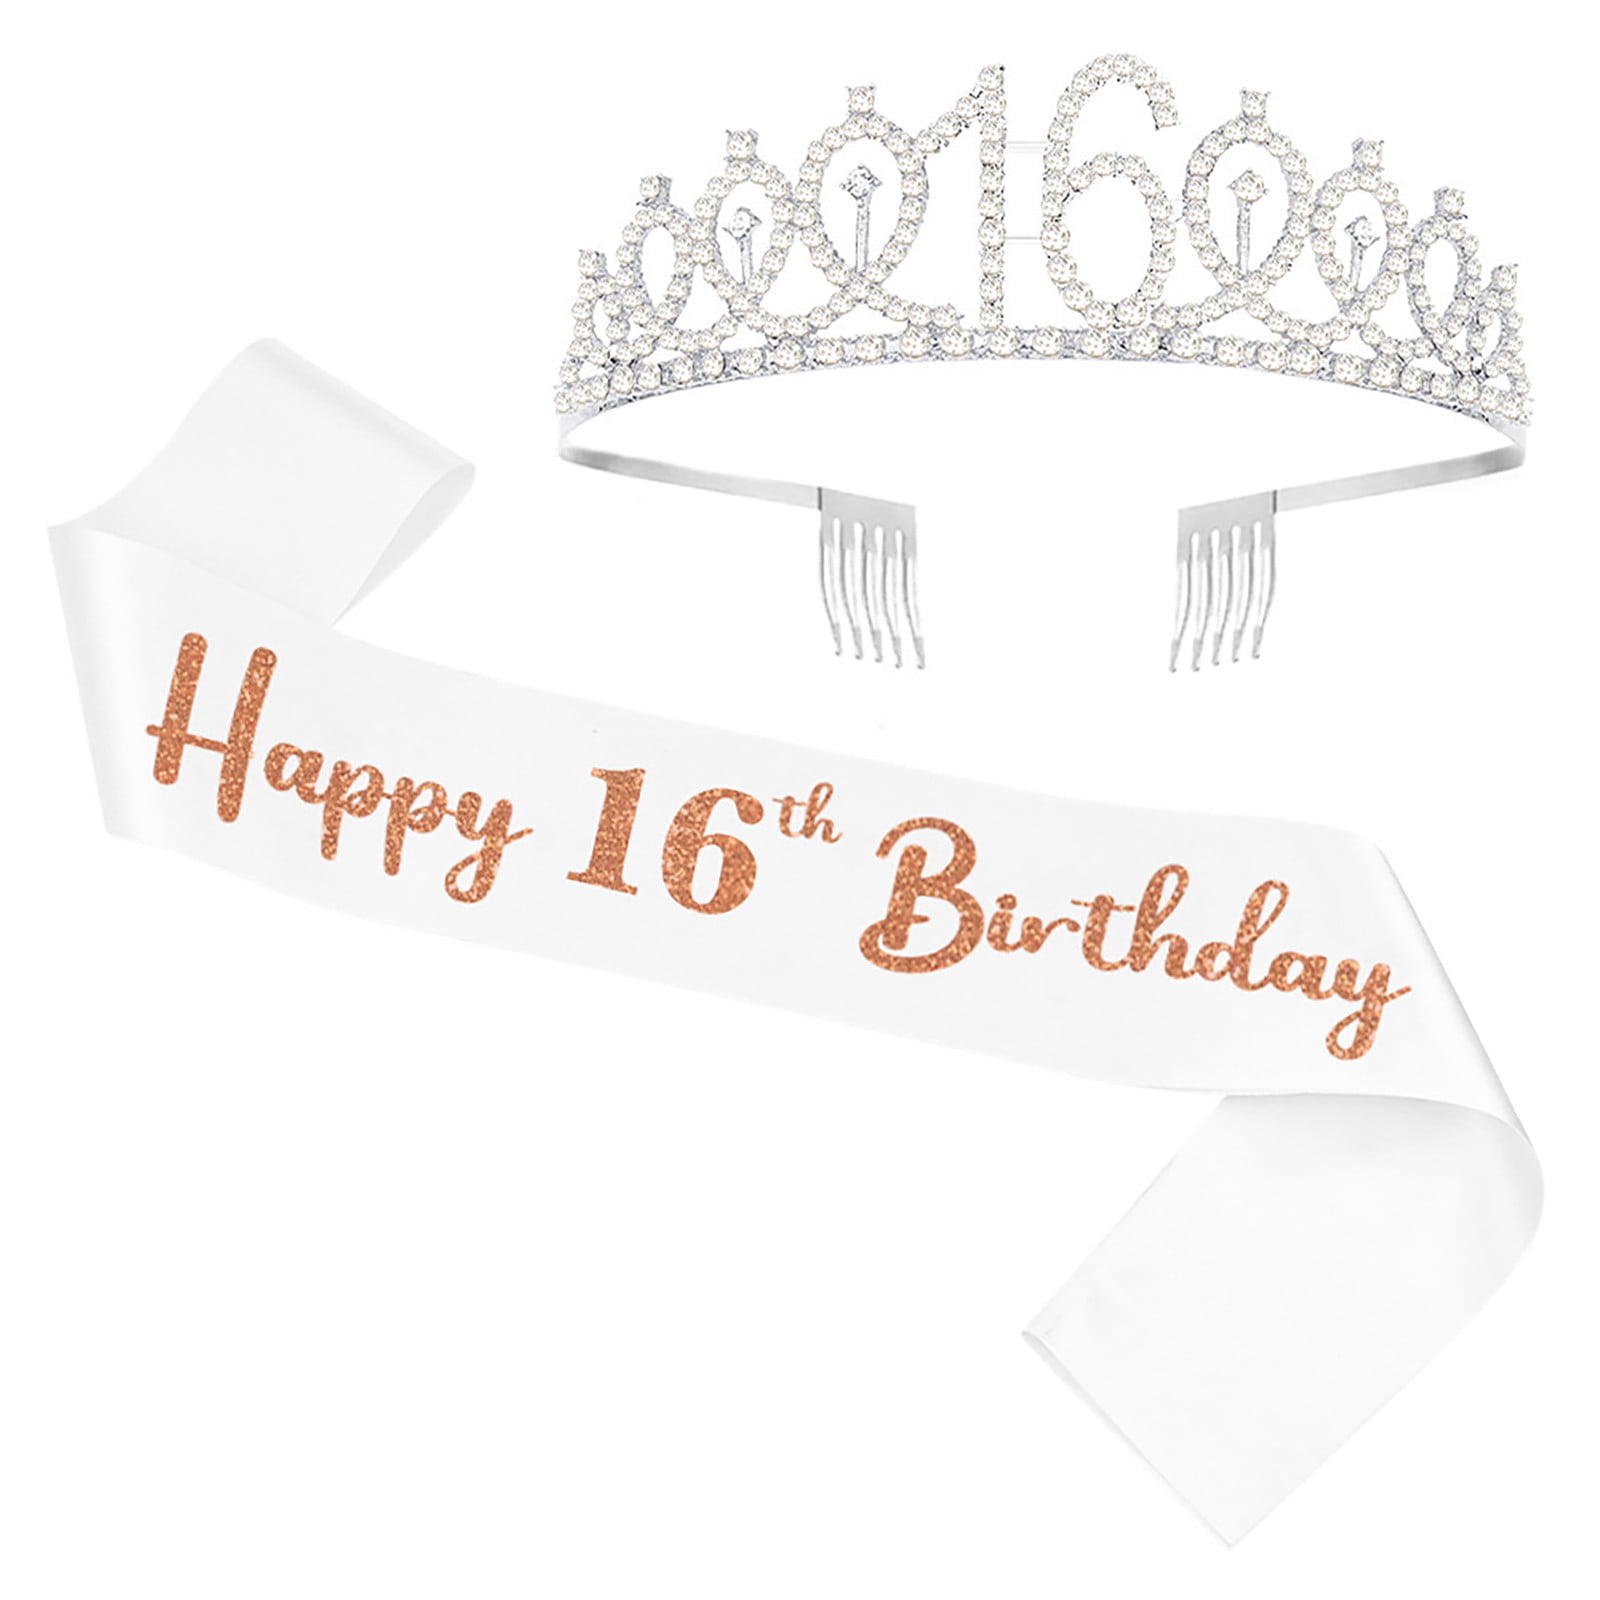 13th-birthday-decorations-for-girls-13th-birthday-sash-crown-tiara